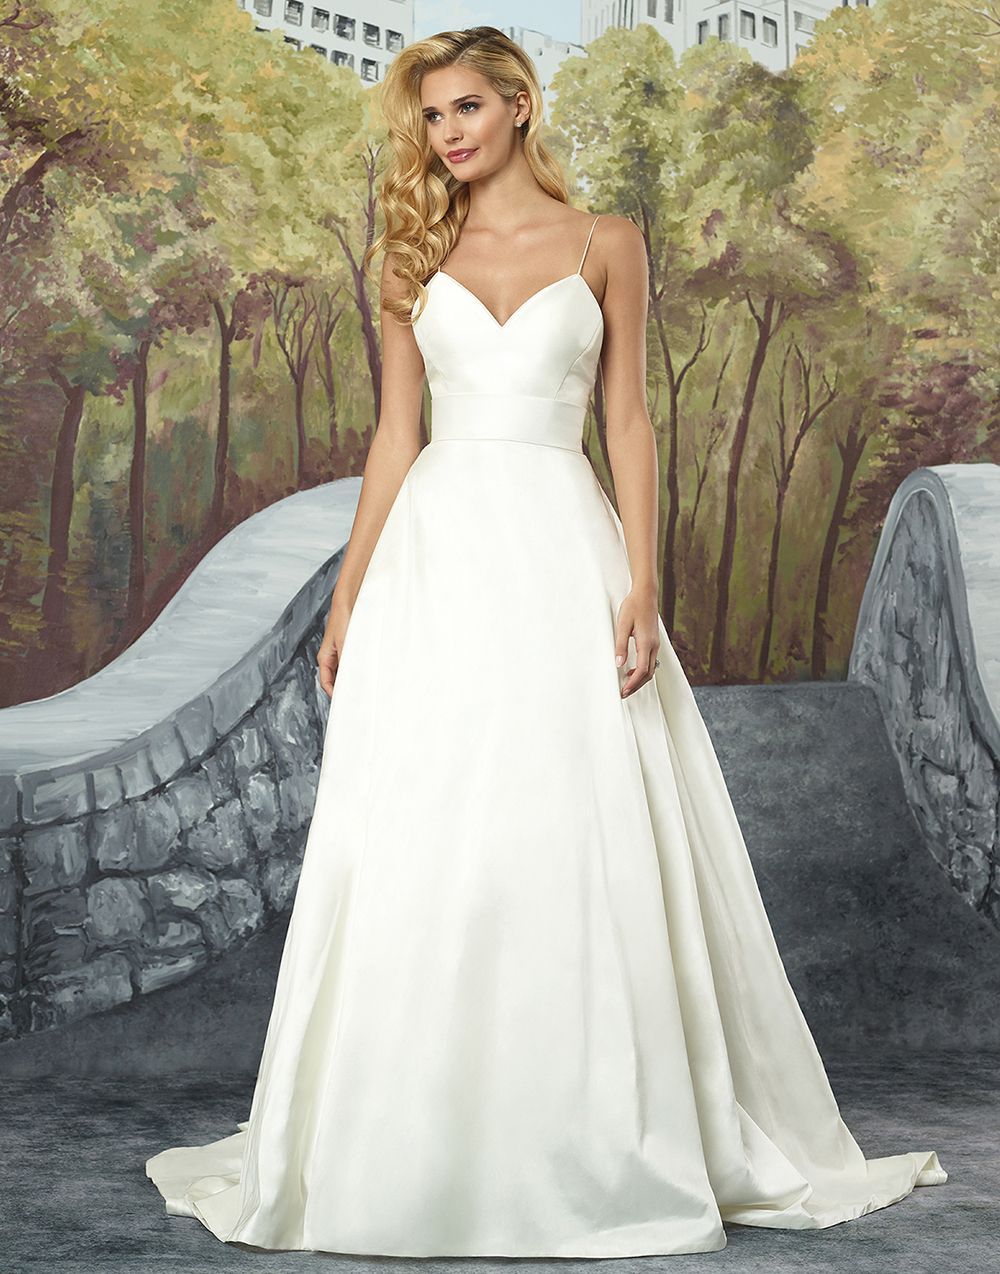 Justin Alexander wedding dresses style 8927 -   24 simple style wedding
 ideas